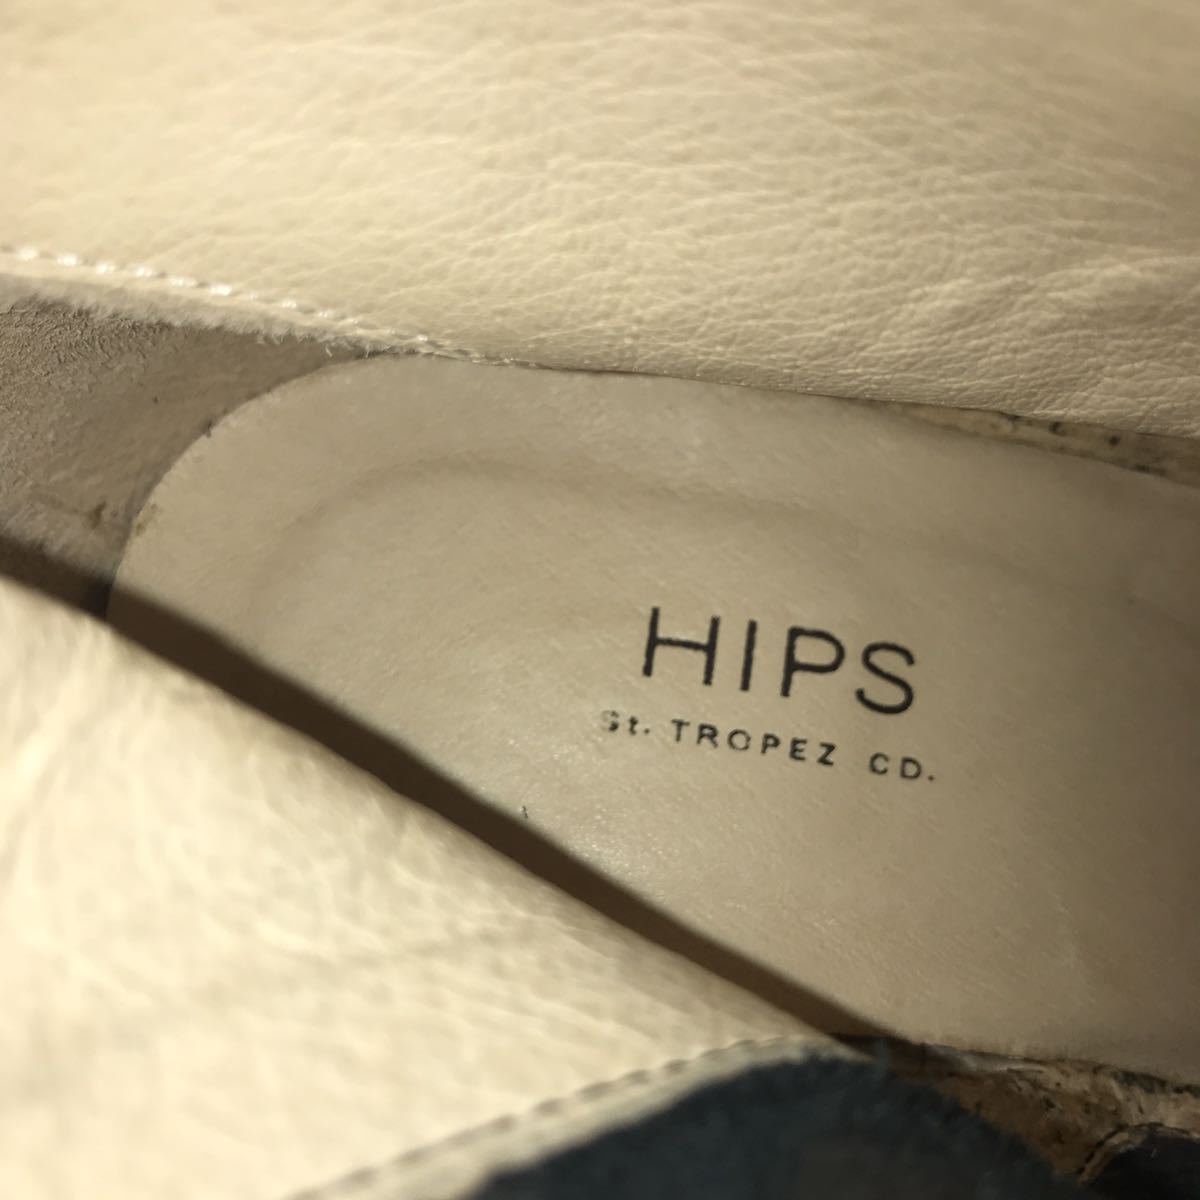 HIPS hip s long boots lady's original leather black 24cm beautiful goods 